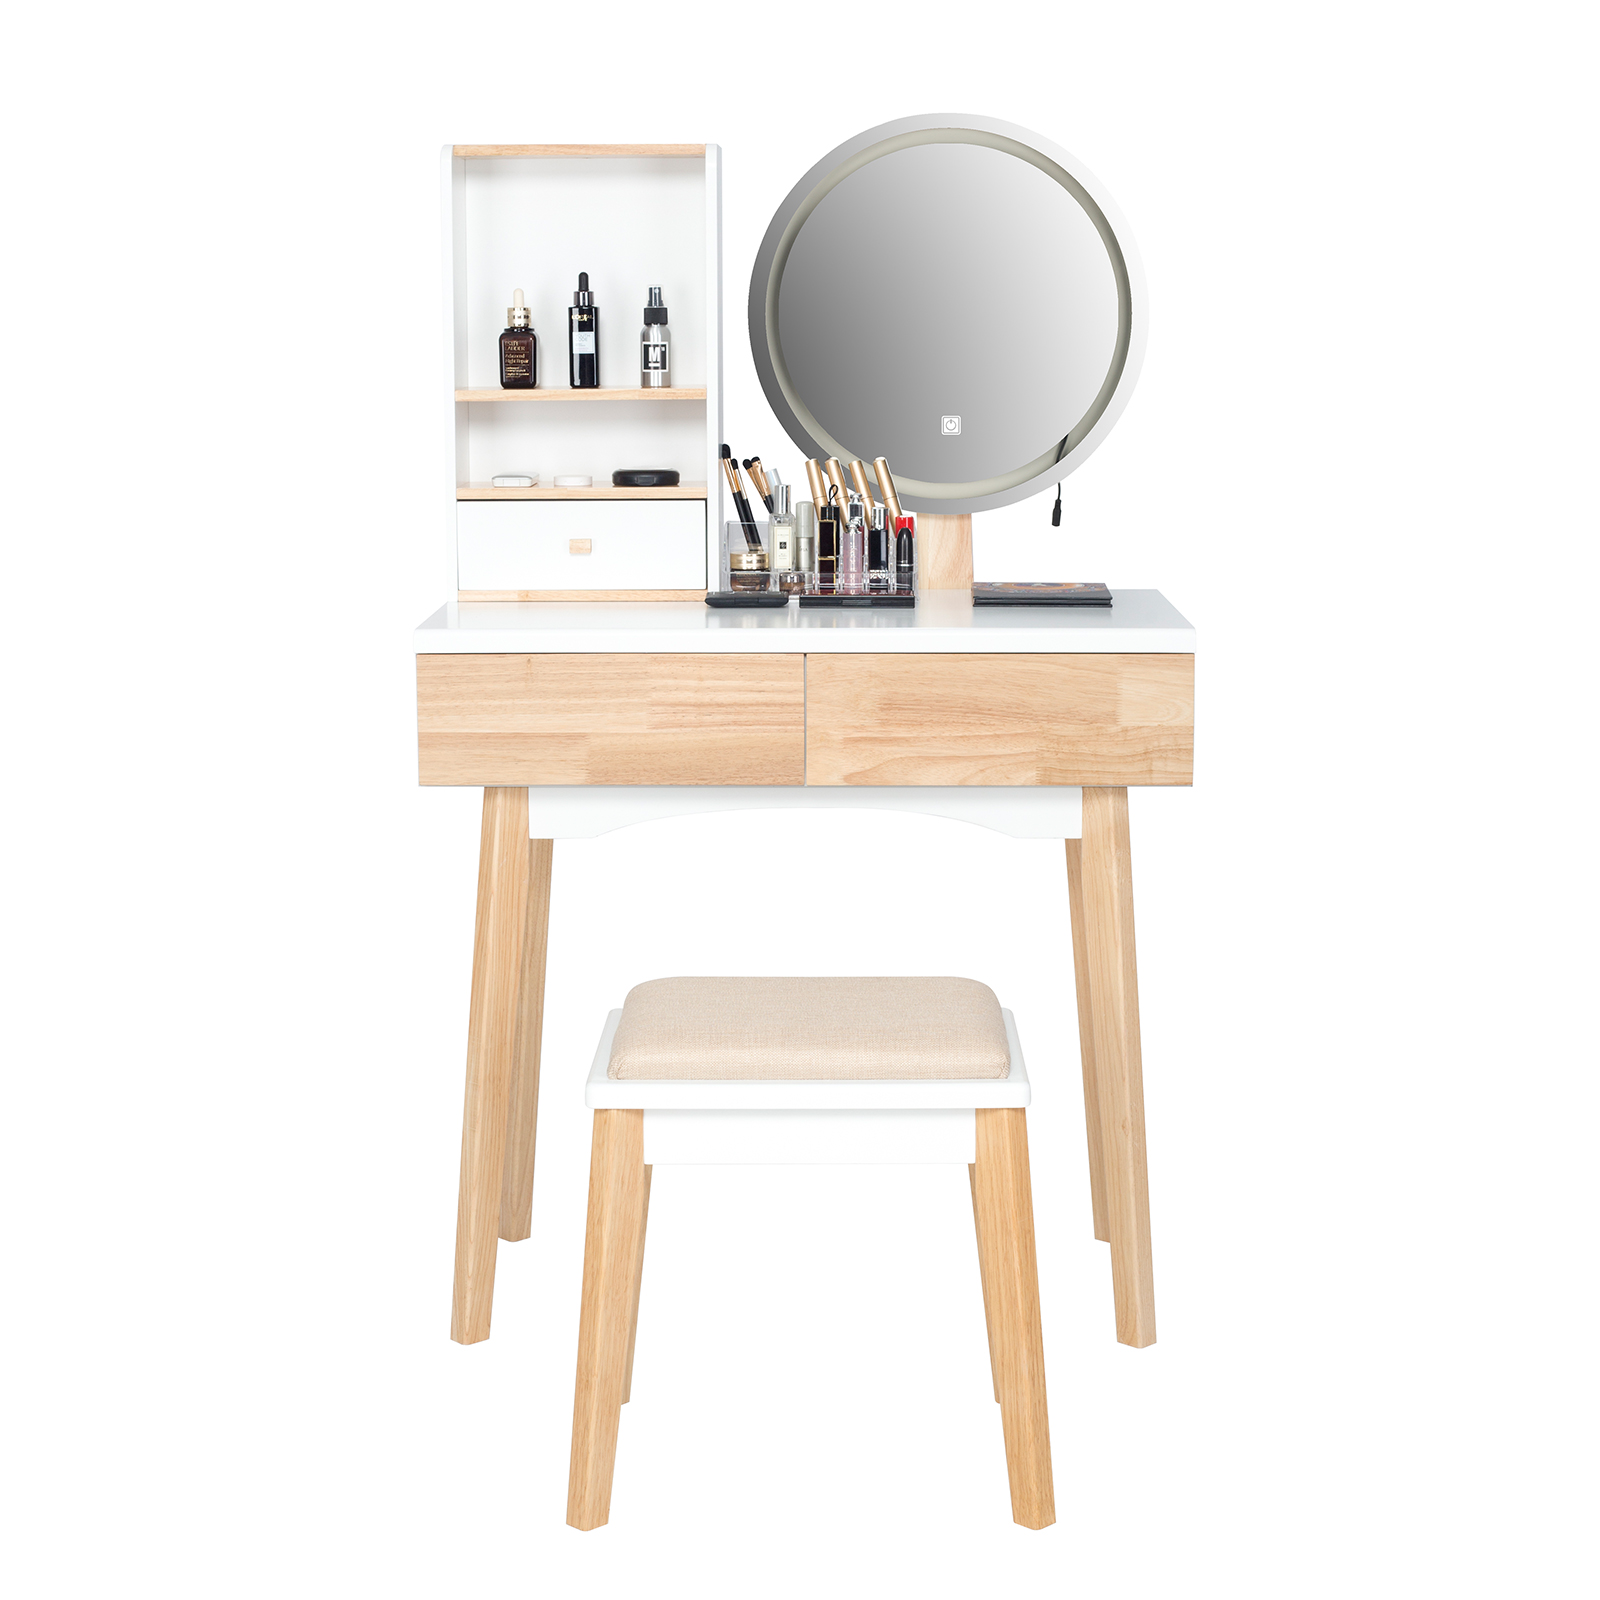 HW1149 3 Color Lighting Modes Vanity Set with Mirror